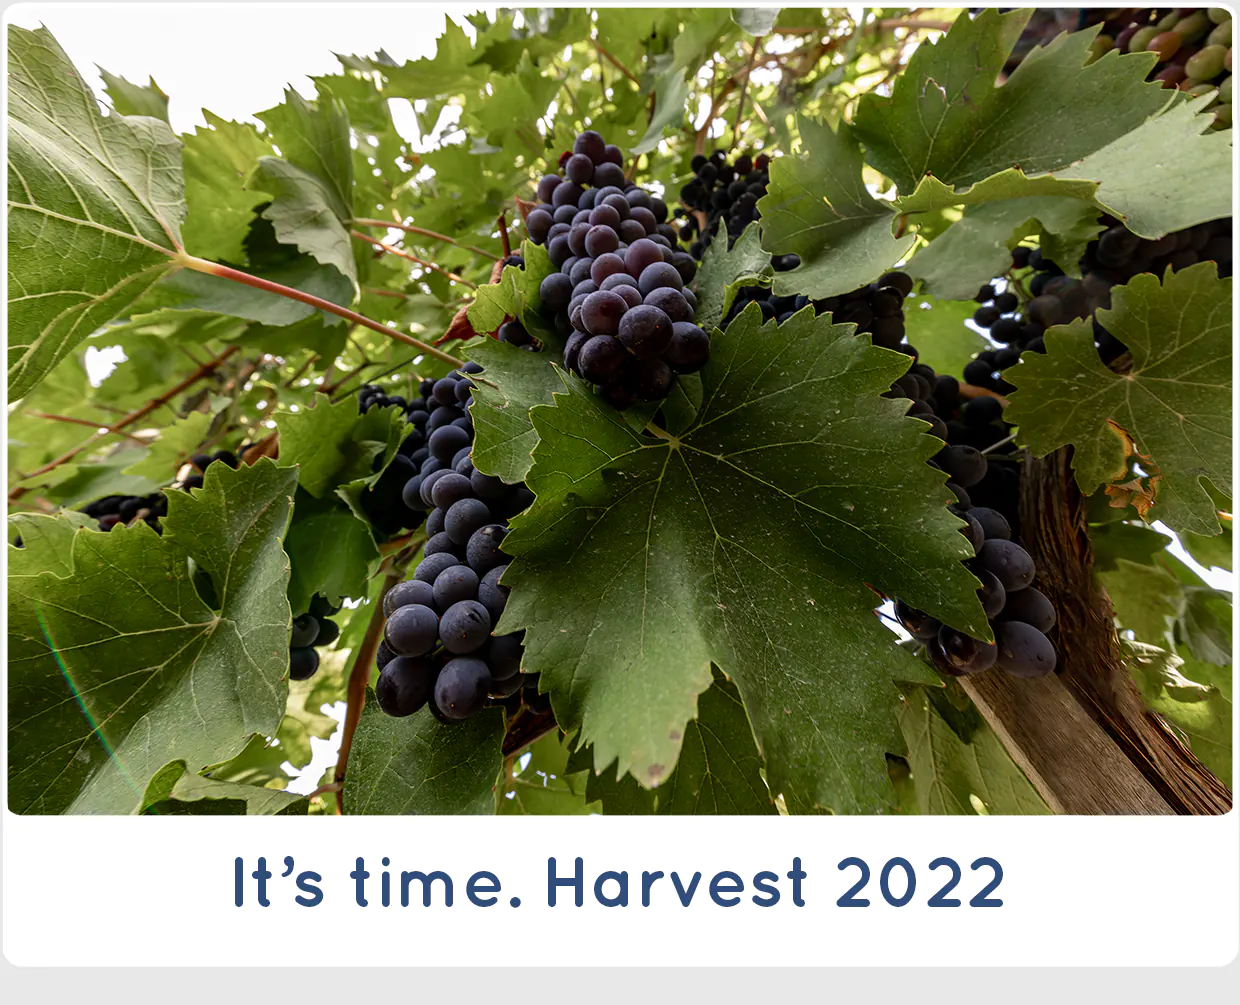 Harvest 2022 at SanCarlo Montalcino